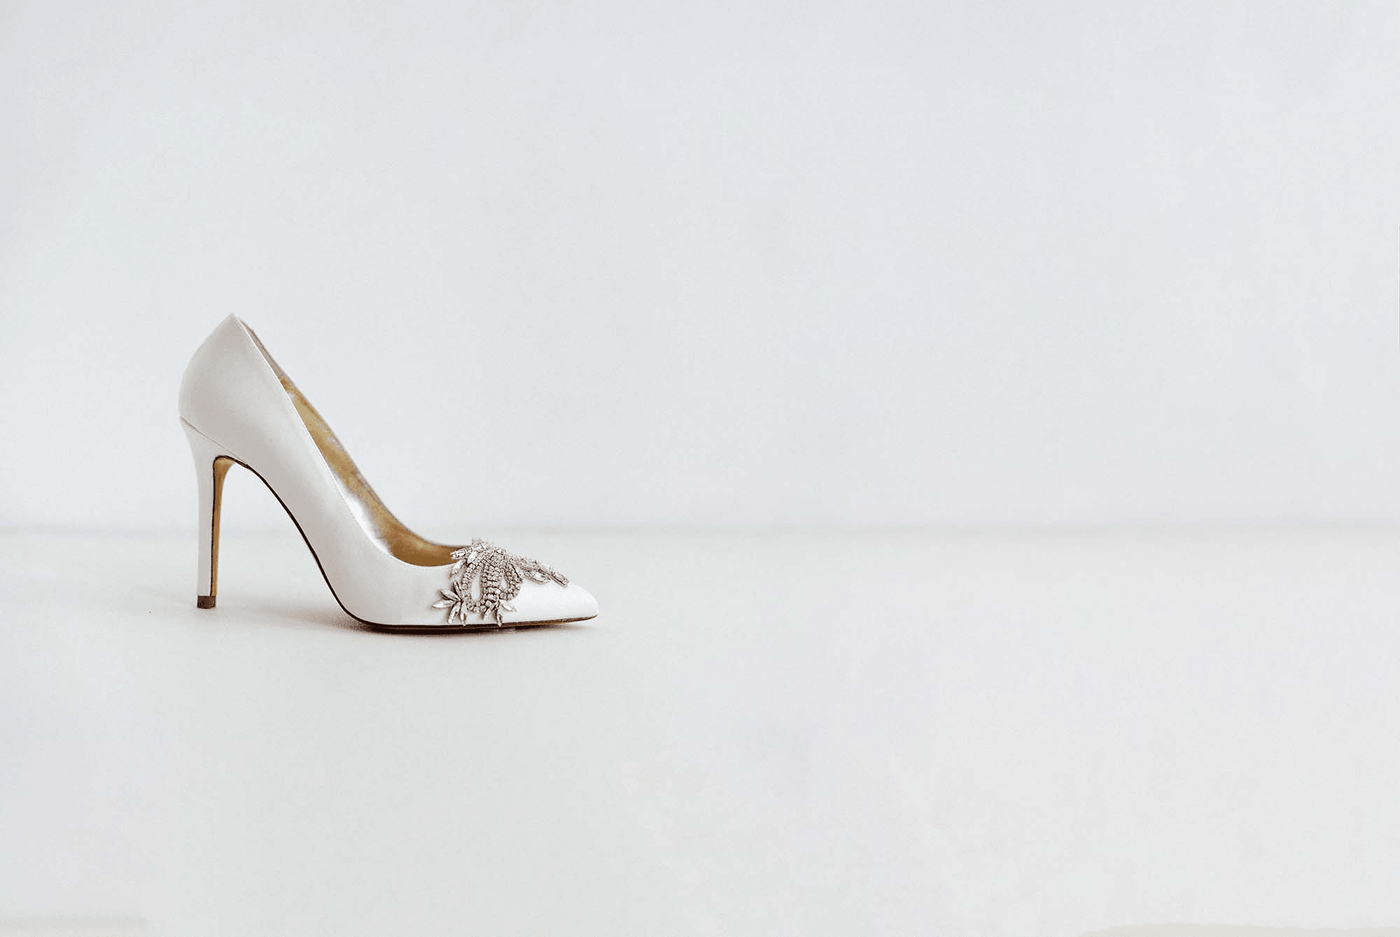 A Freya Rose Ivory Wedding Shoe on a white background.